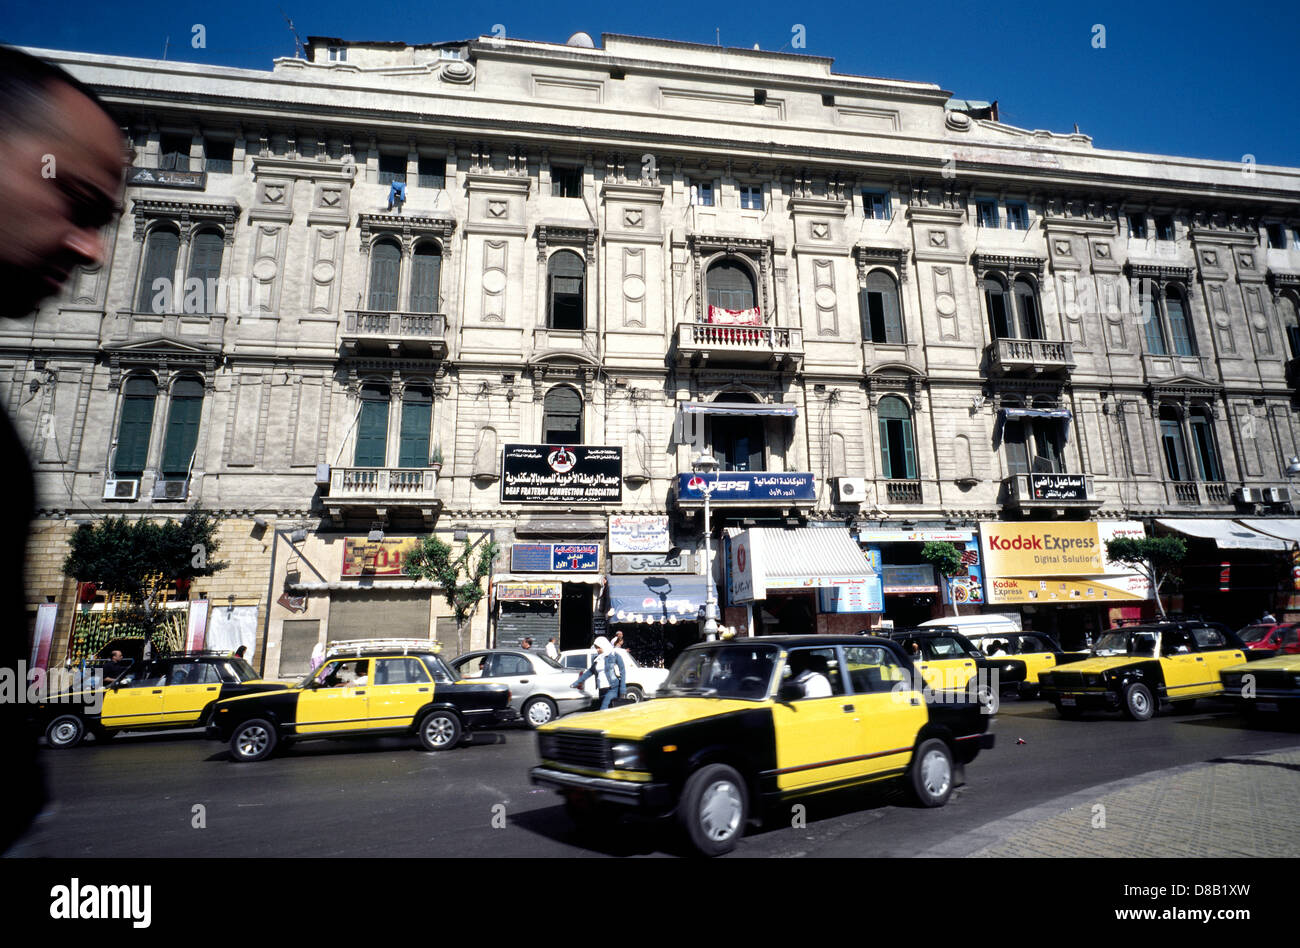 Taxis on Midan Orabi (Orabi Square) in Egyptian Alexandria. Stock Photo